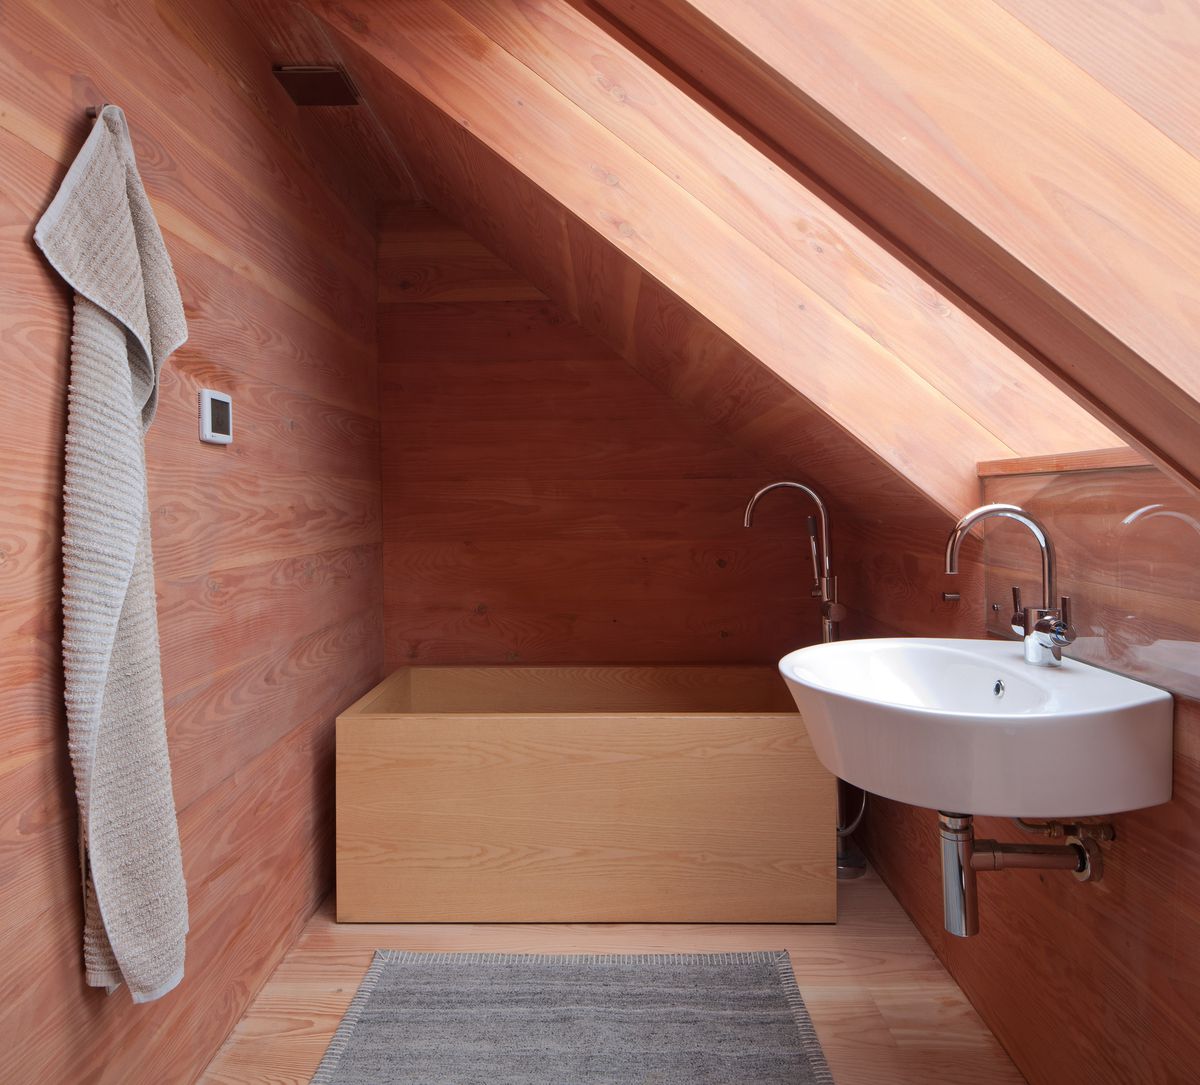 Bathroom with wooden tub